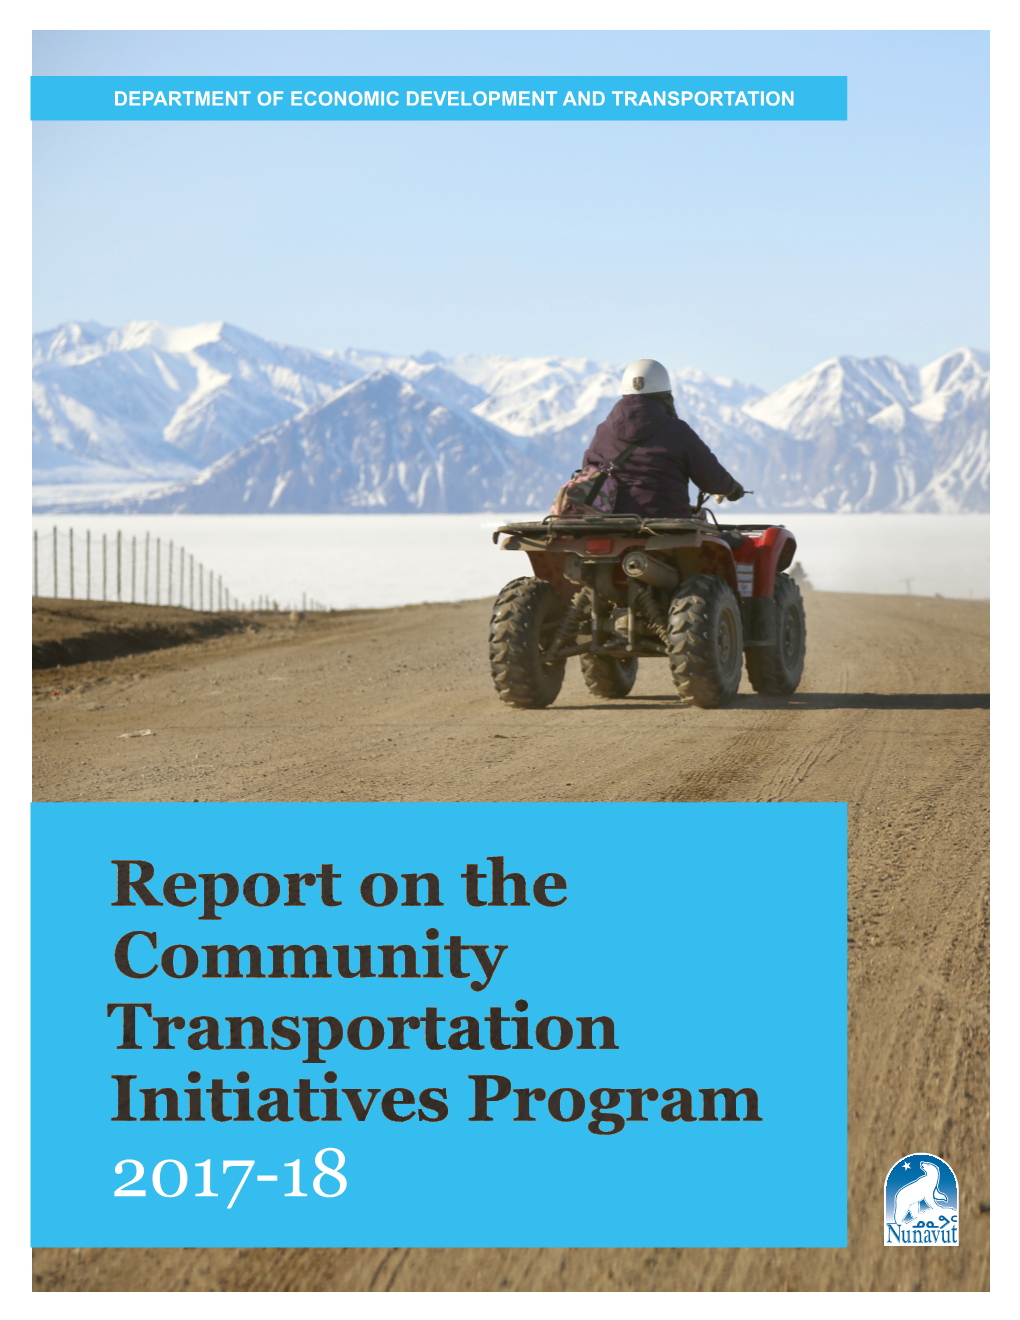 Community Transportation Initiatives Program 2017-2018